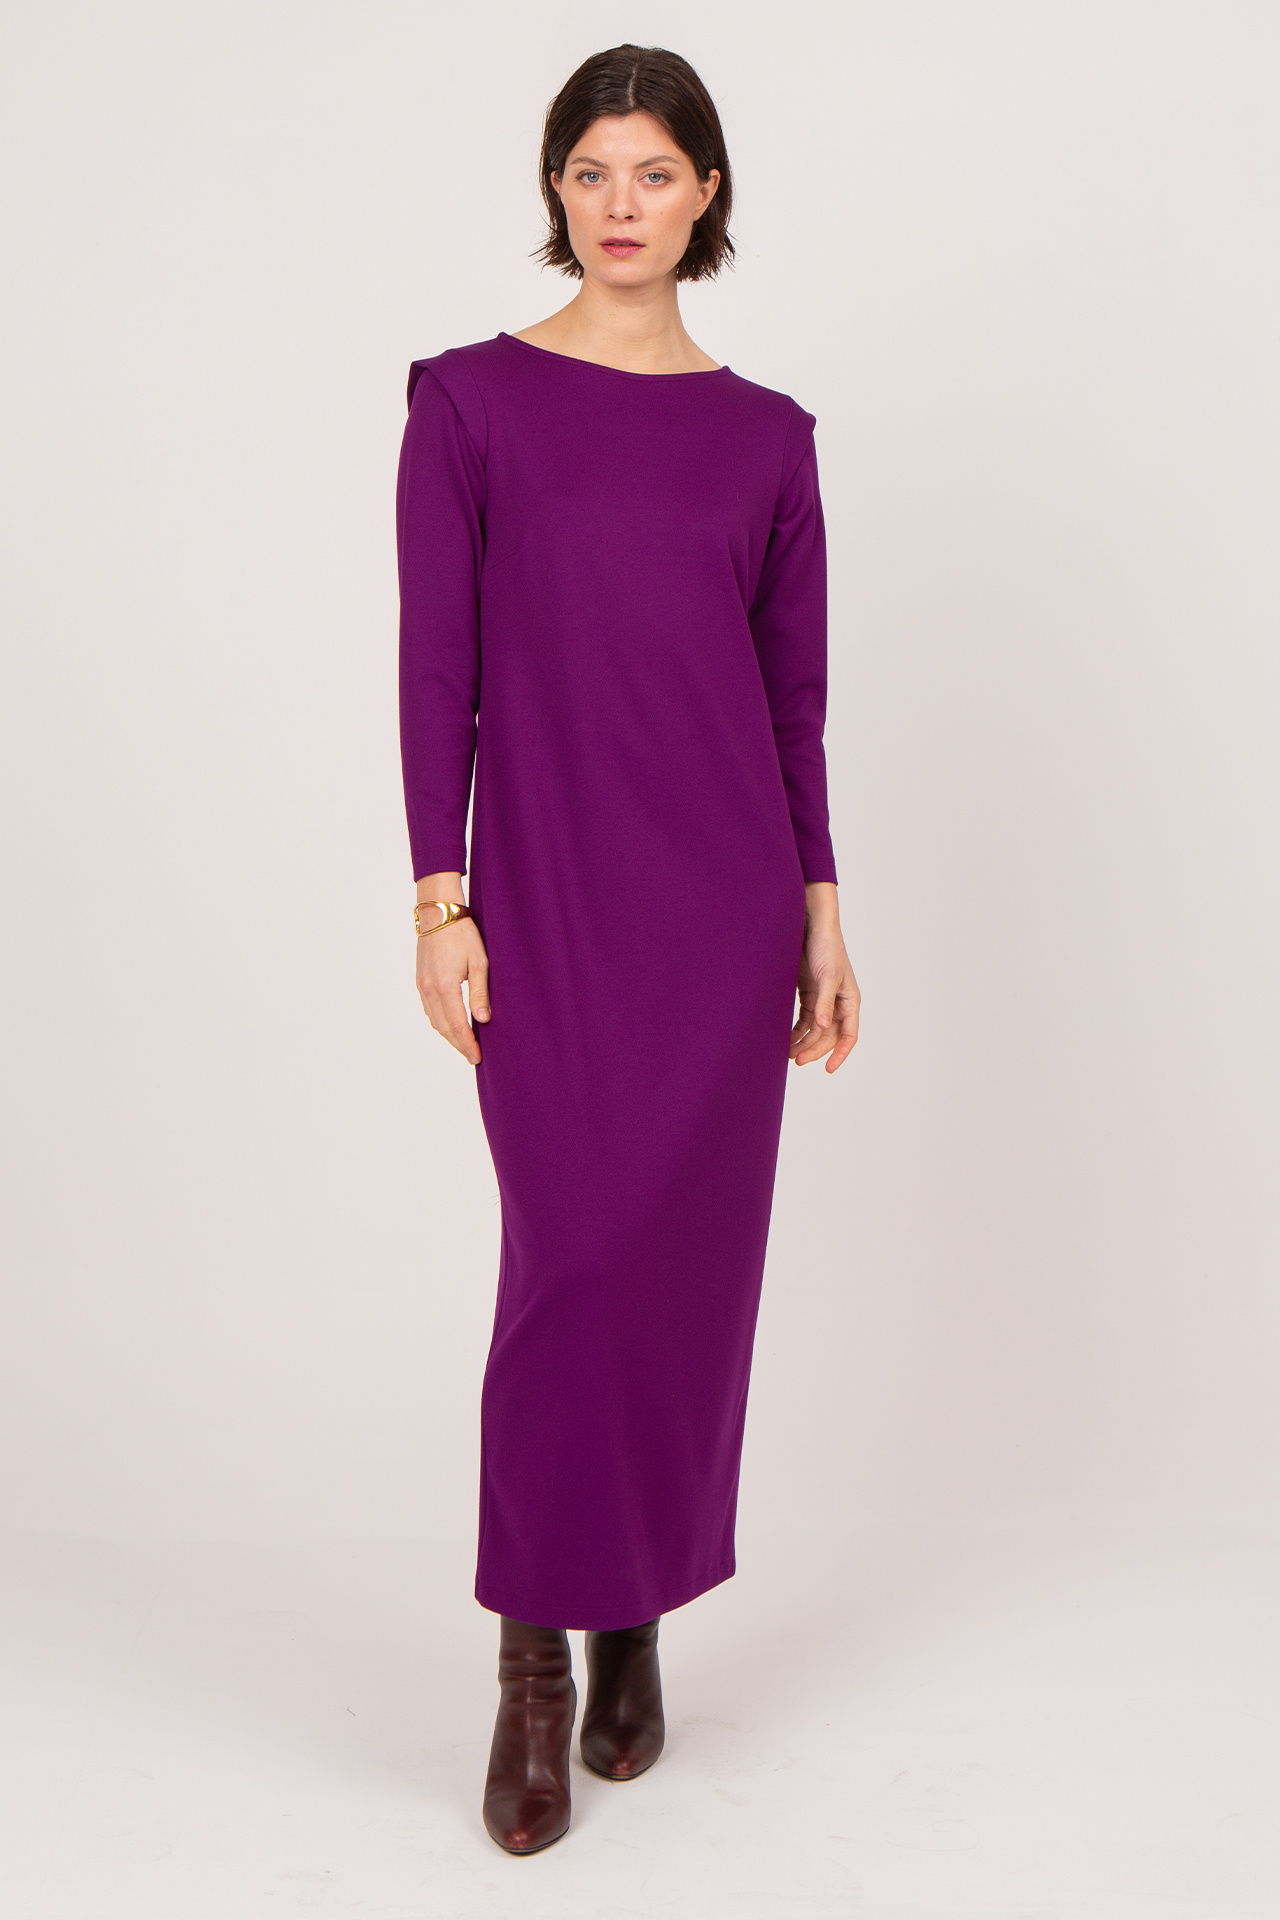 Casedy violet jurk Nathalie